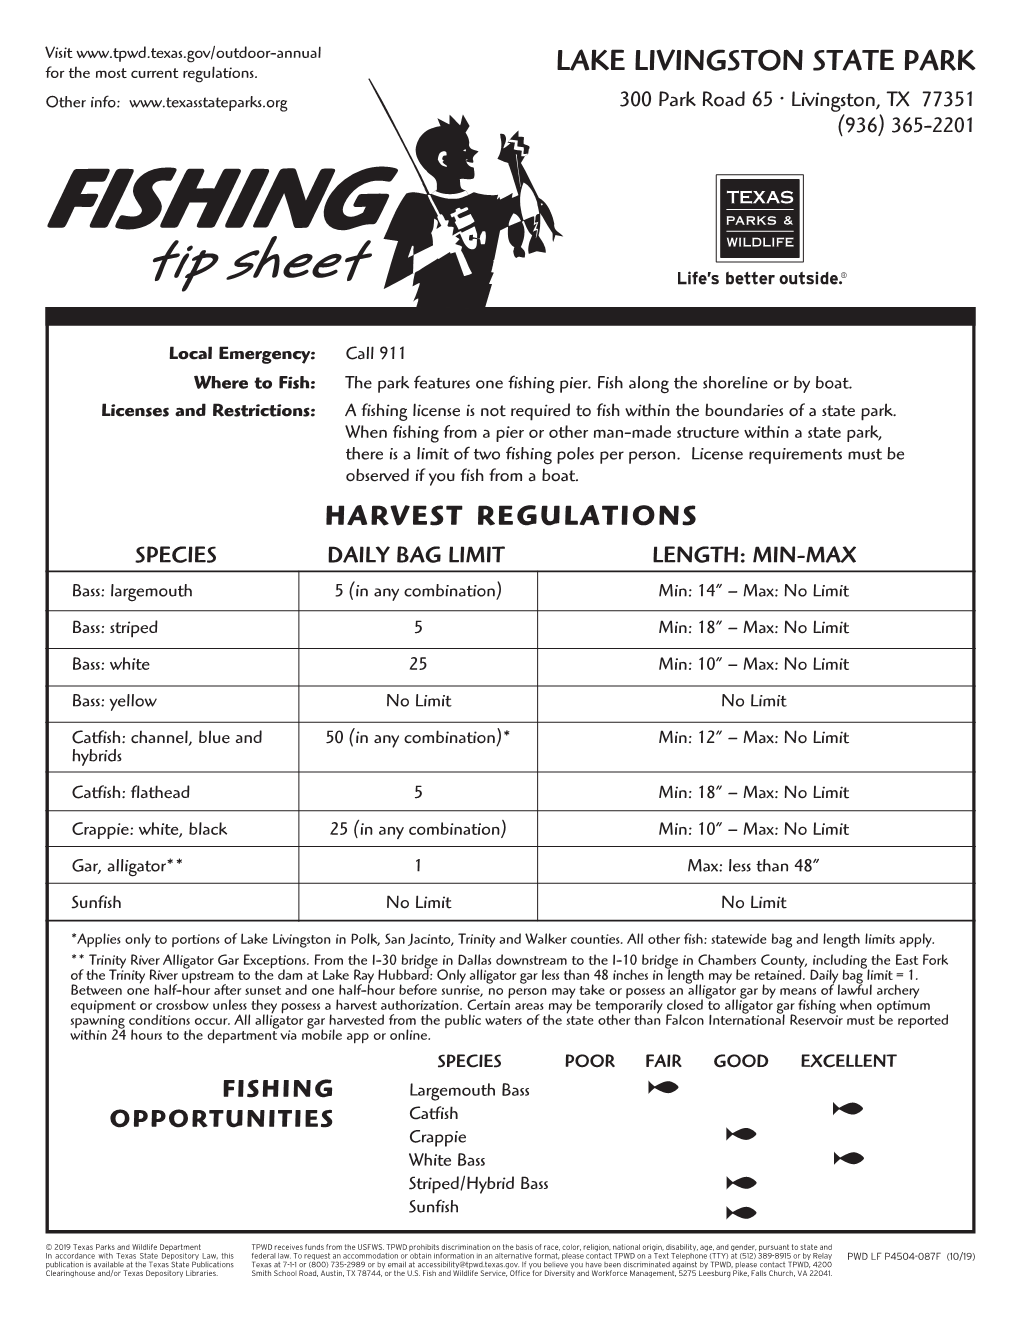 Lake Livingston State Park Fishing Guide